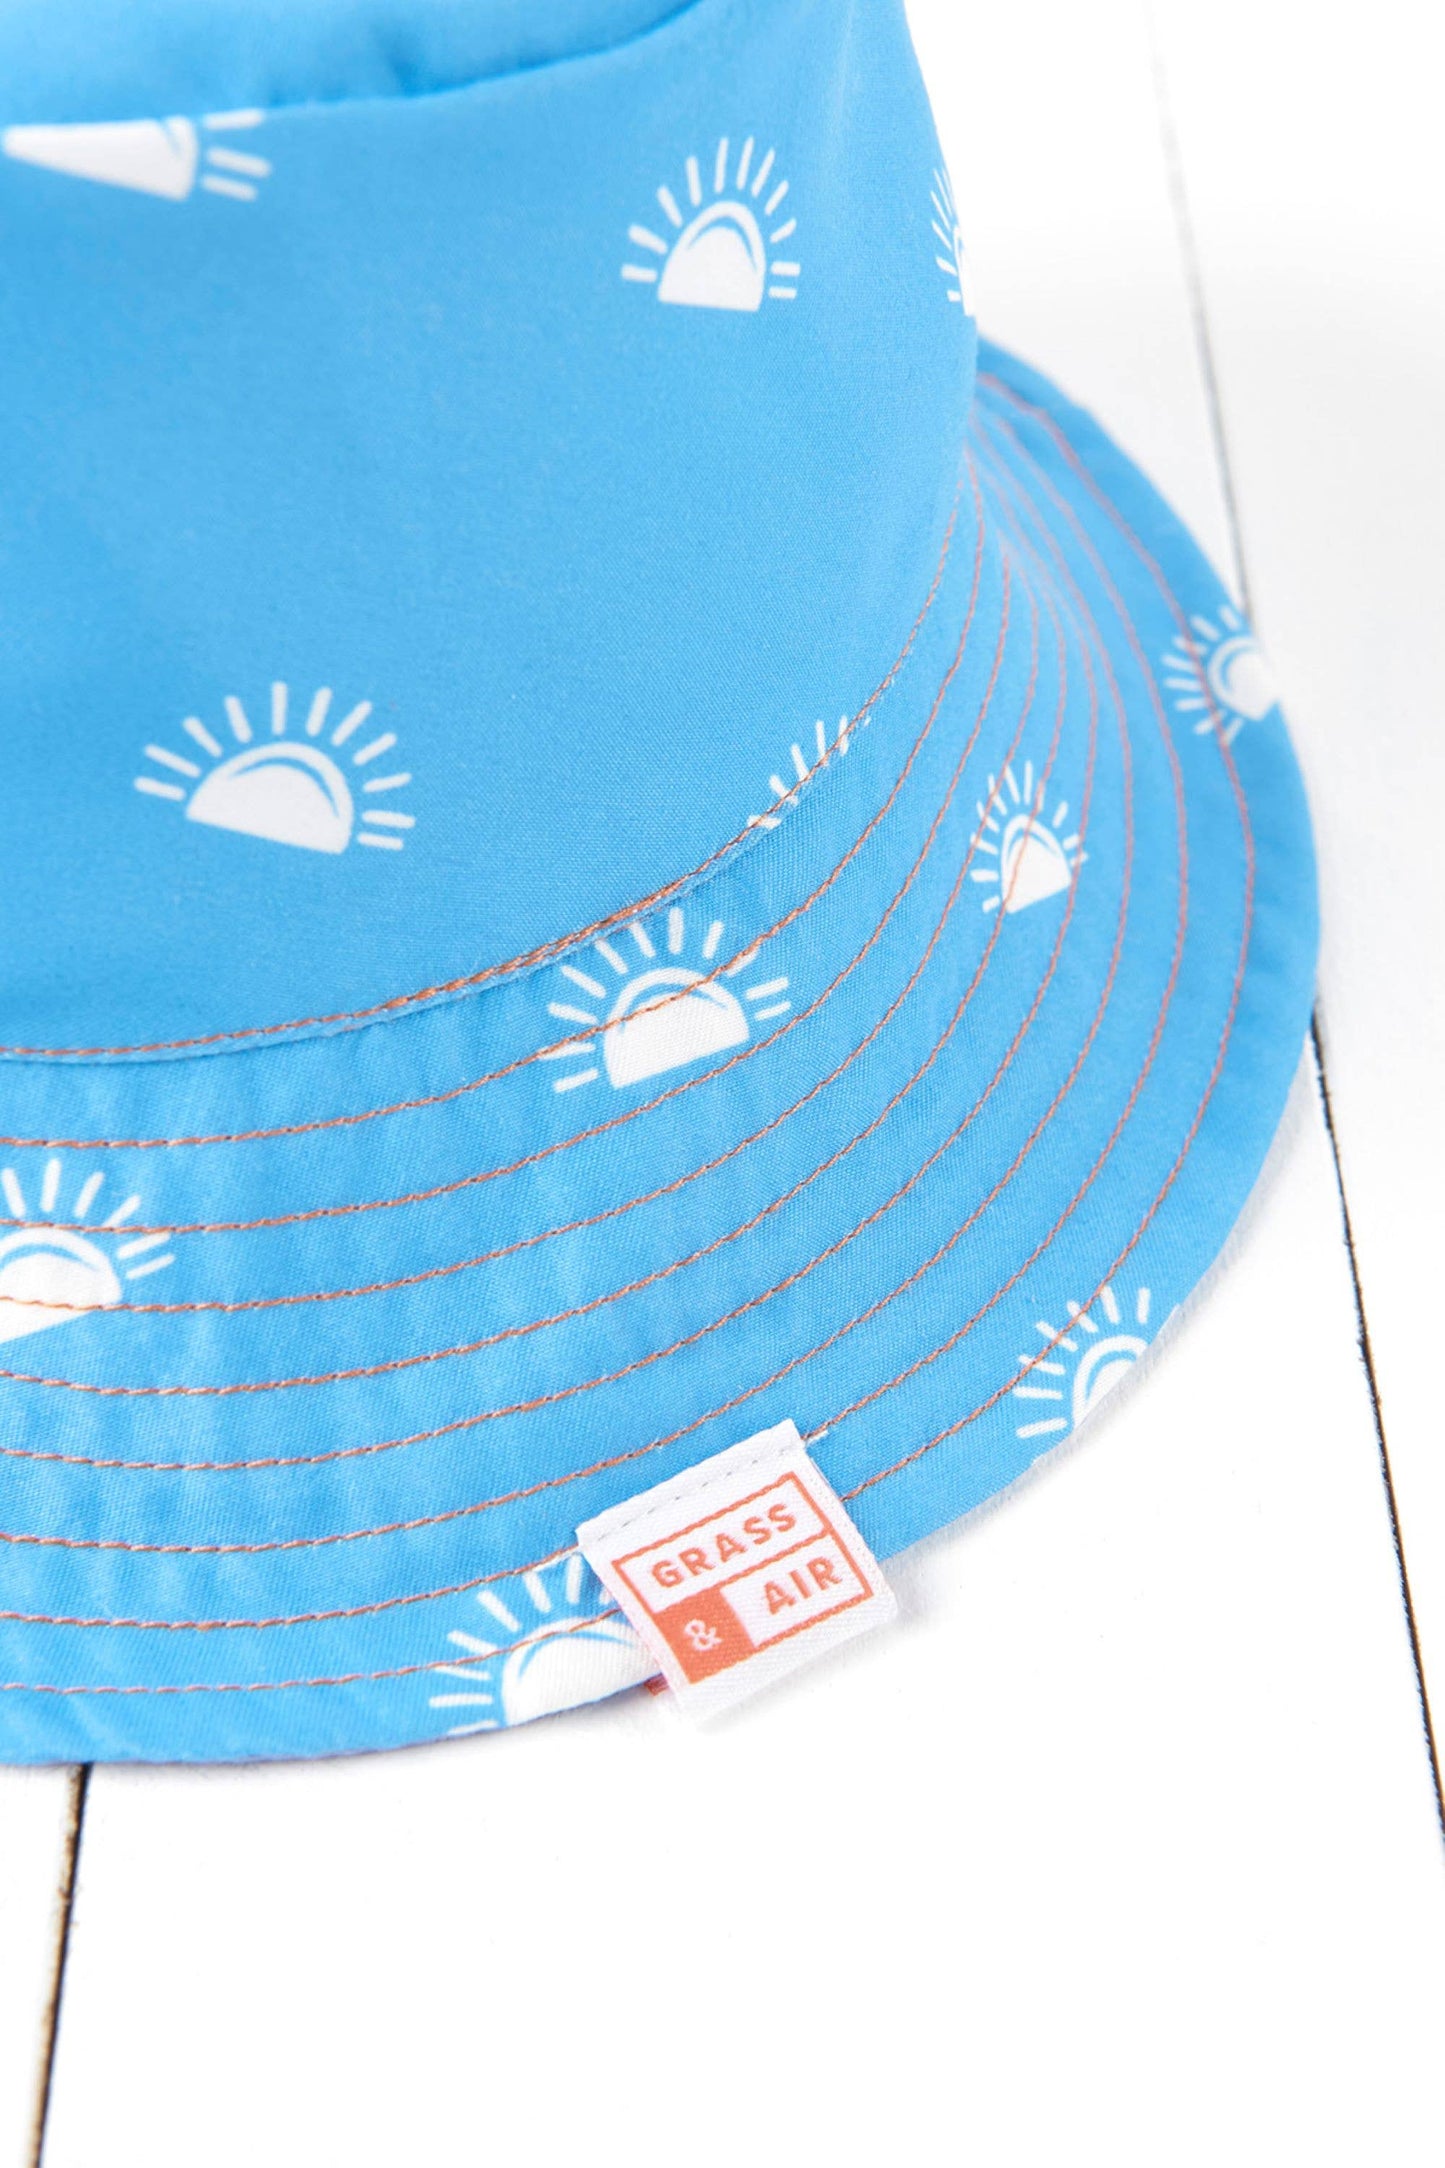 Grass & Air - Cornflower Blue and Lavender Reversible Sun Hat